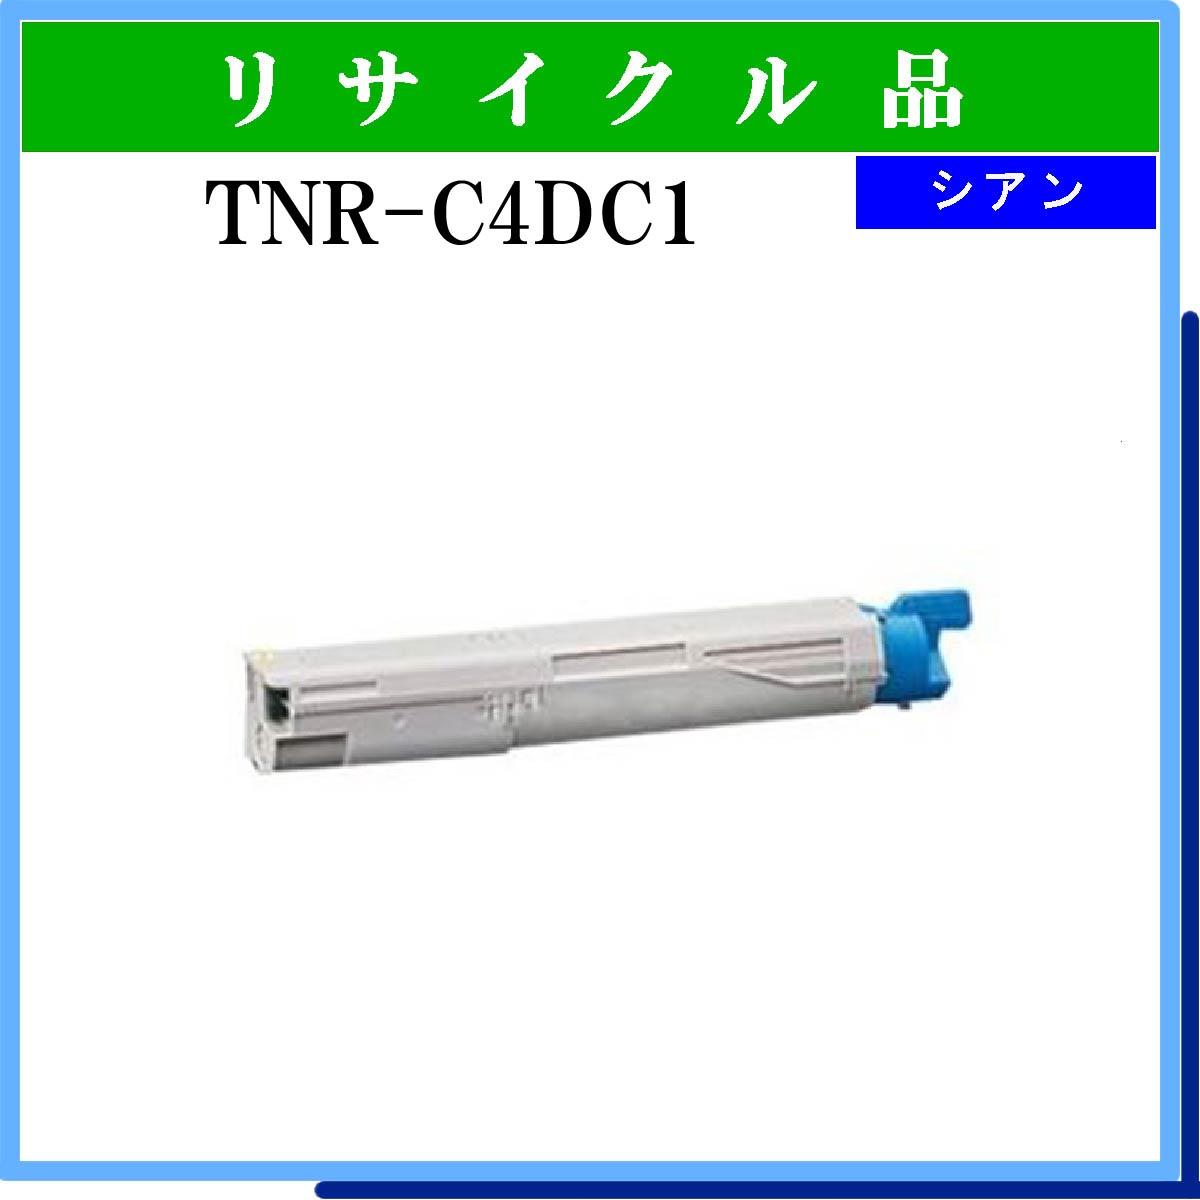 TNR-C4DC1